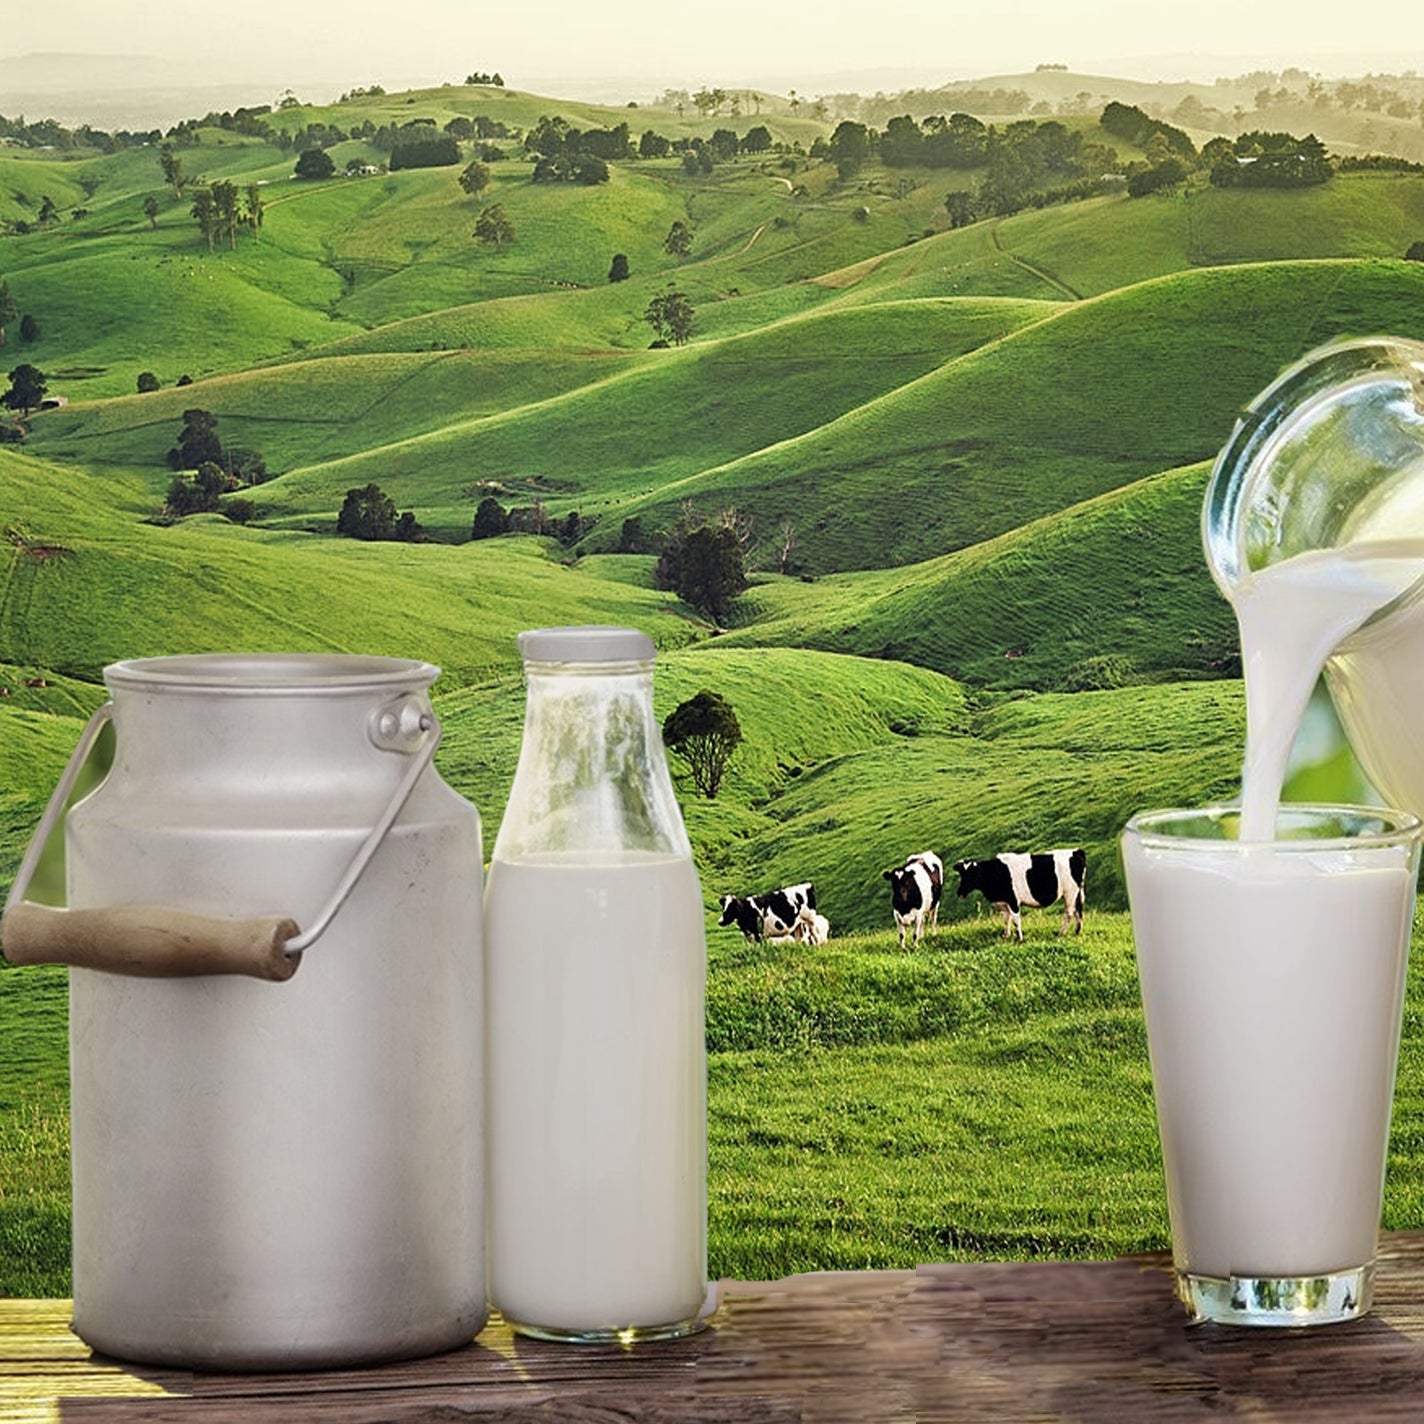 Jersey Milk - Wide Range Of Tasty & Healthy Milk